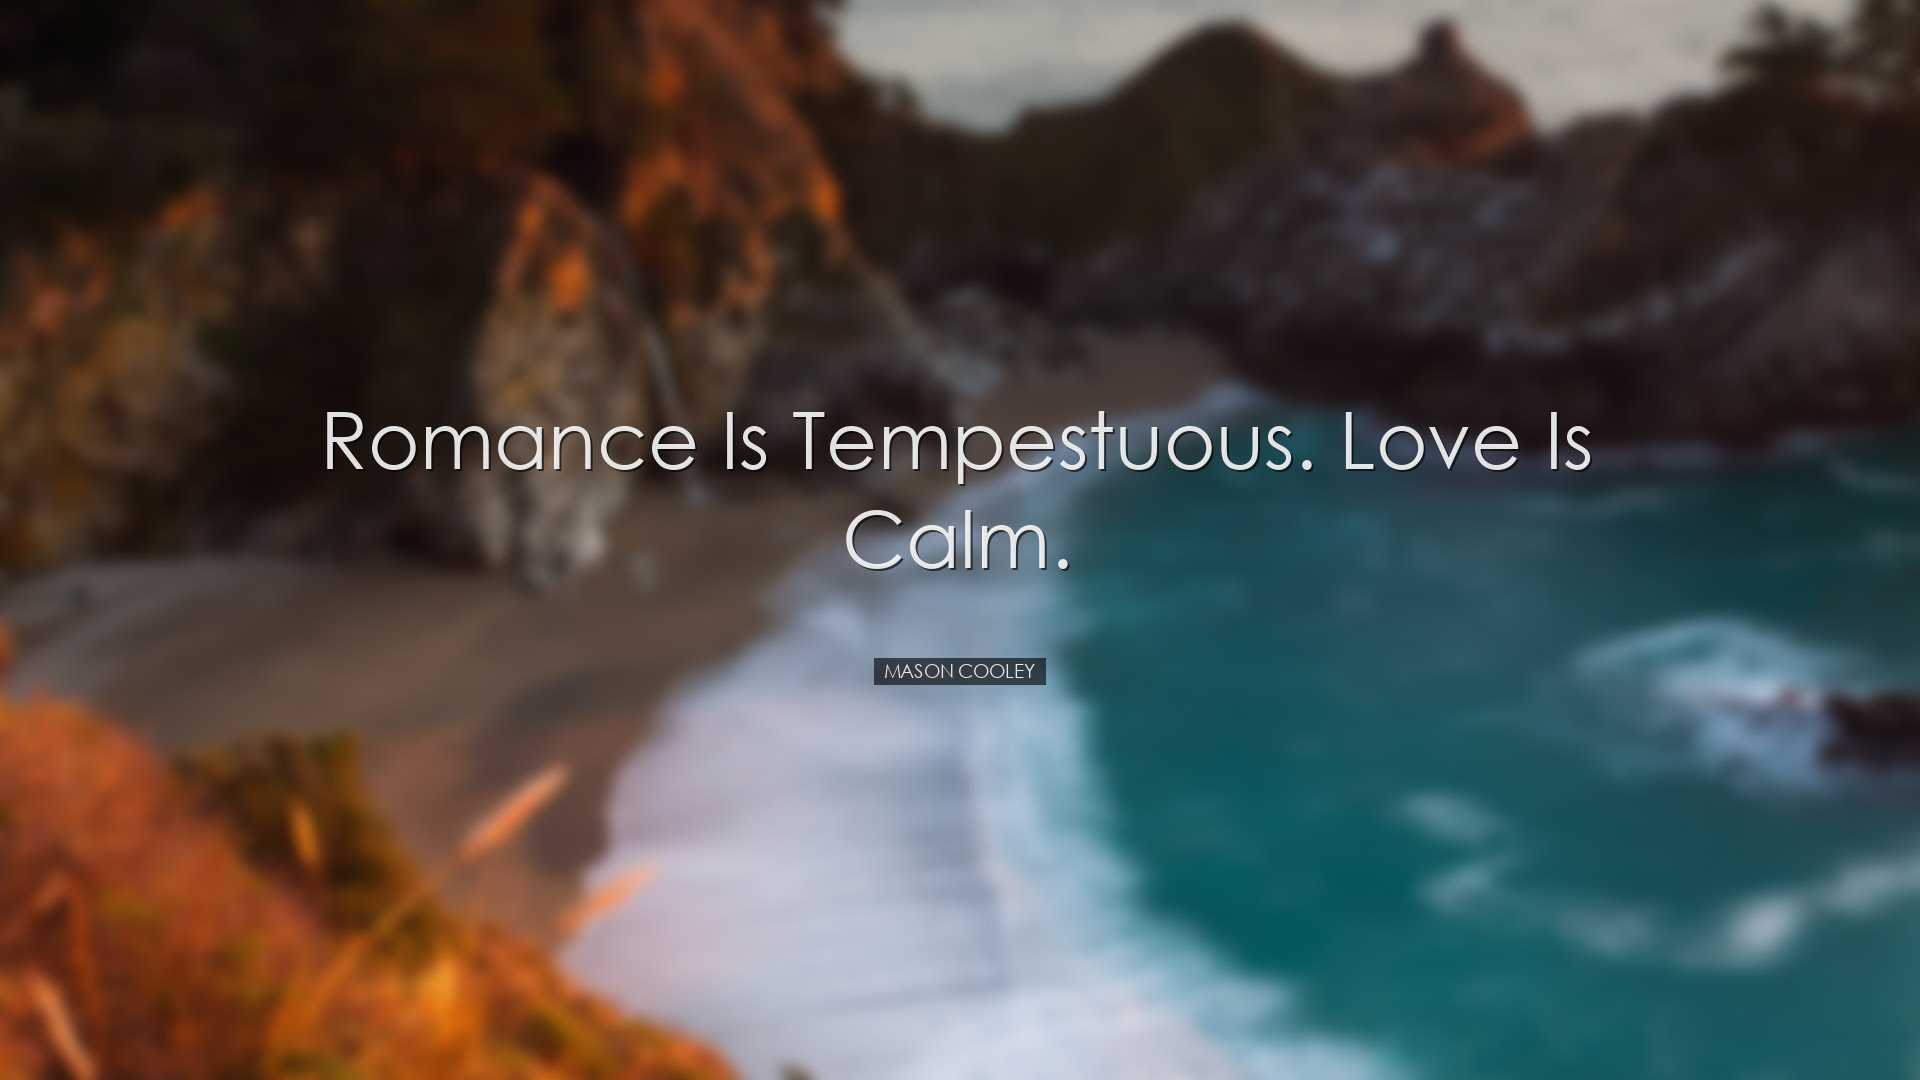 Romance is tempestuous. Love is calm. - Mason Cooley